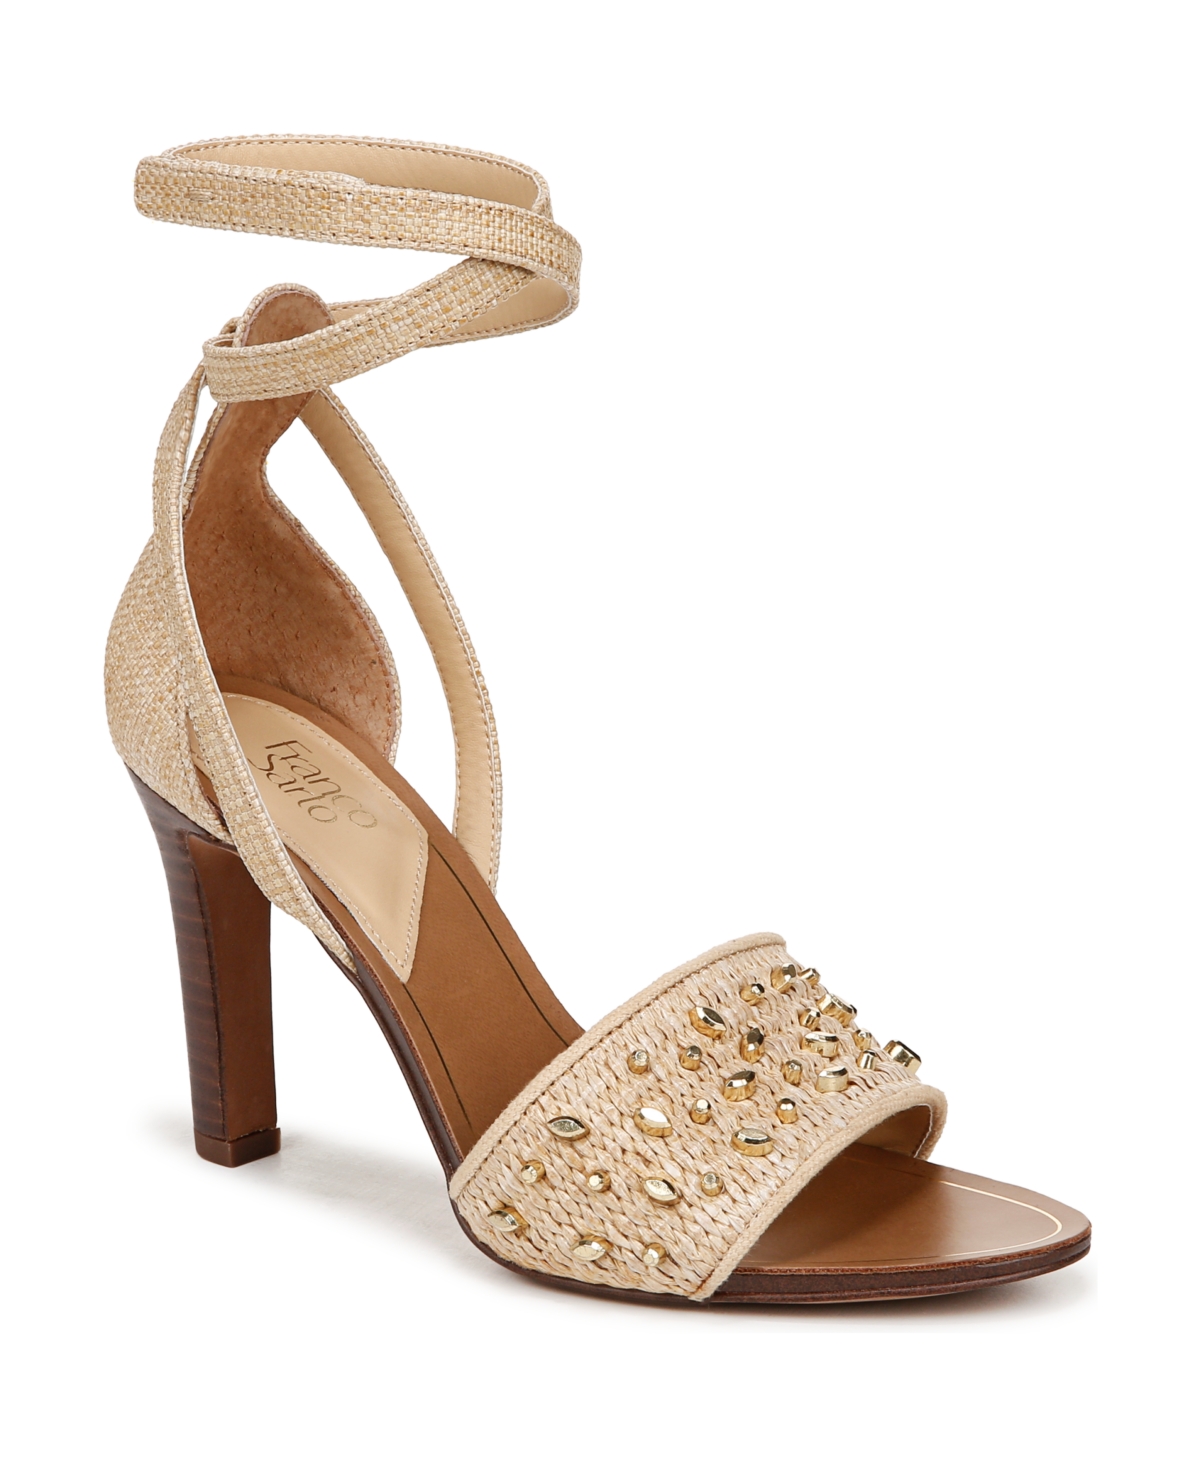 Eleanor 2 Ankle Strap Evening Sandals - Natural Beige Raffia